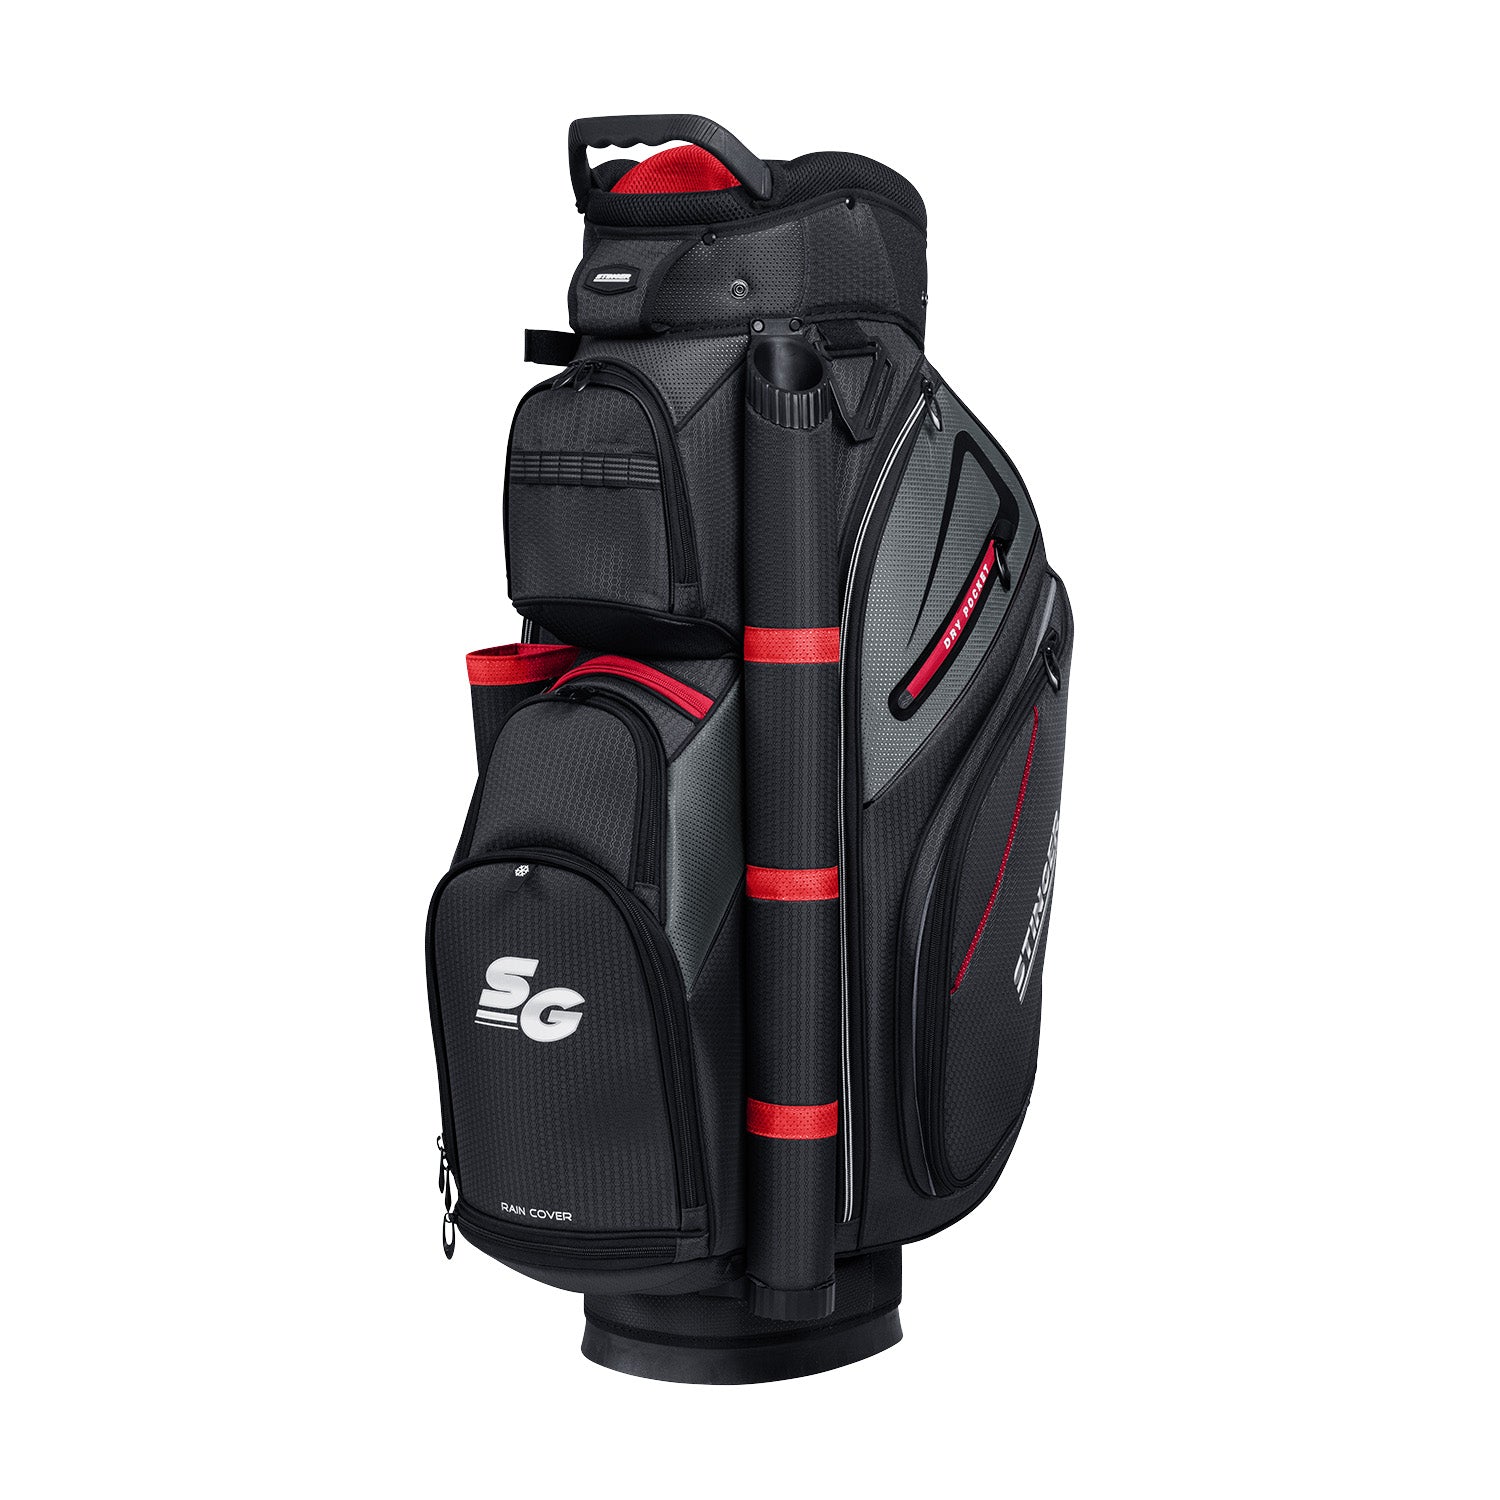 Stinger Premium Golf Bag - Black/Red